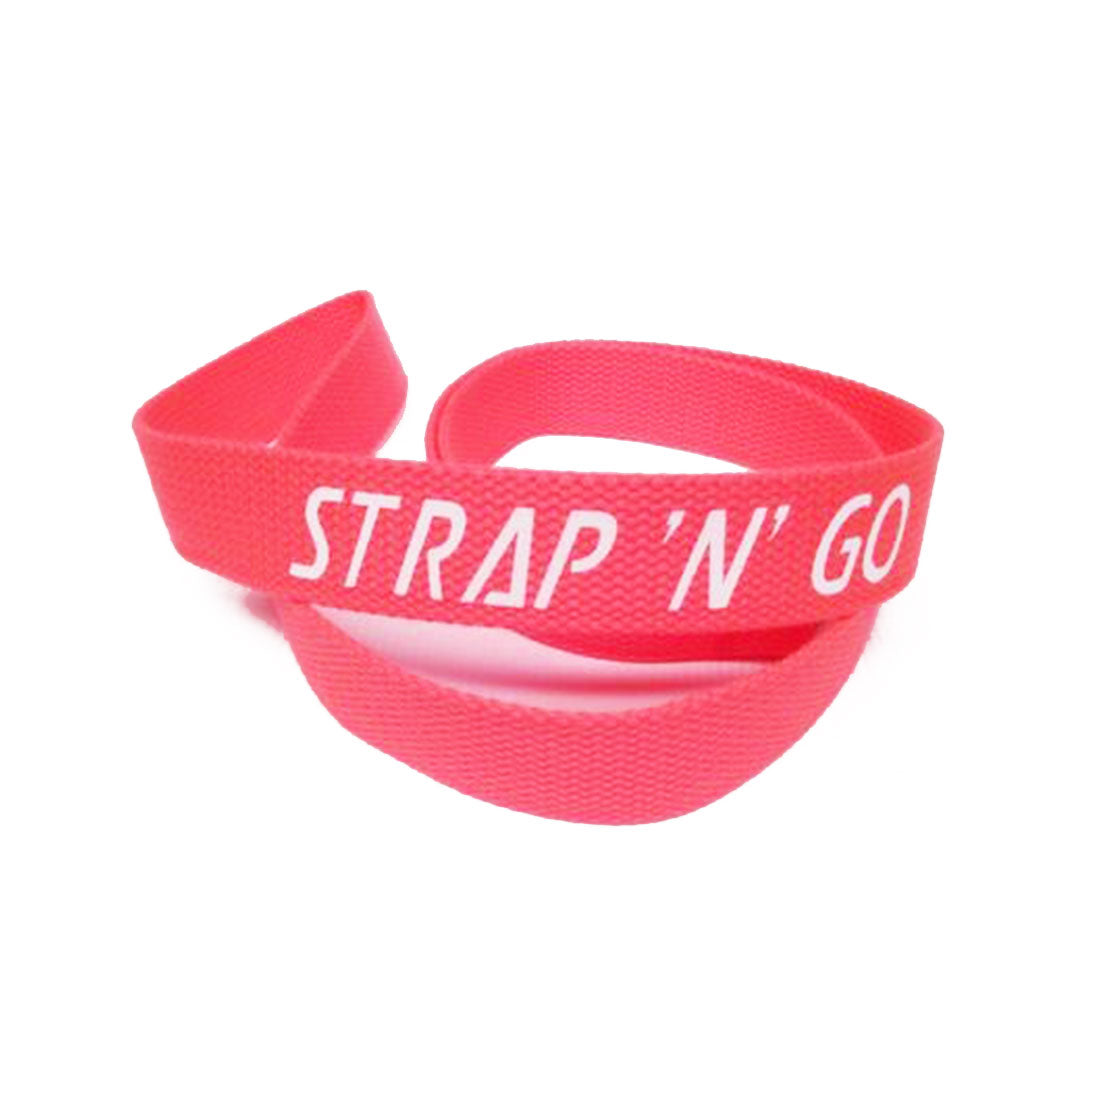 Strap N Go Skate Noose/Leash - Solid Colours Coral Pink Roller Skate Accessories